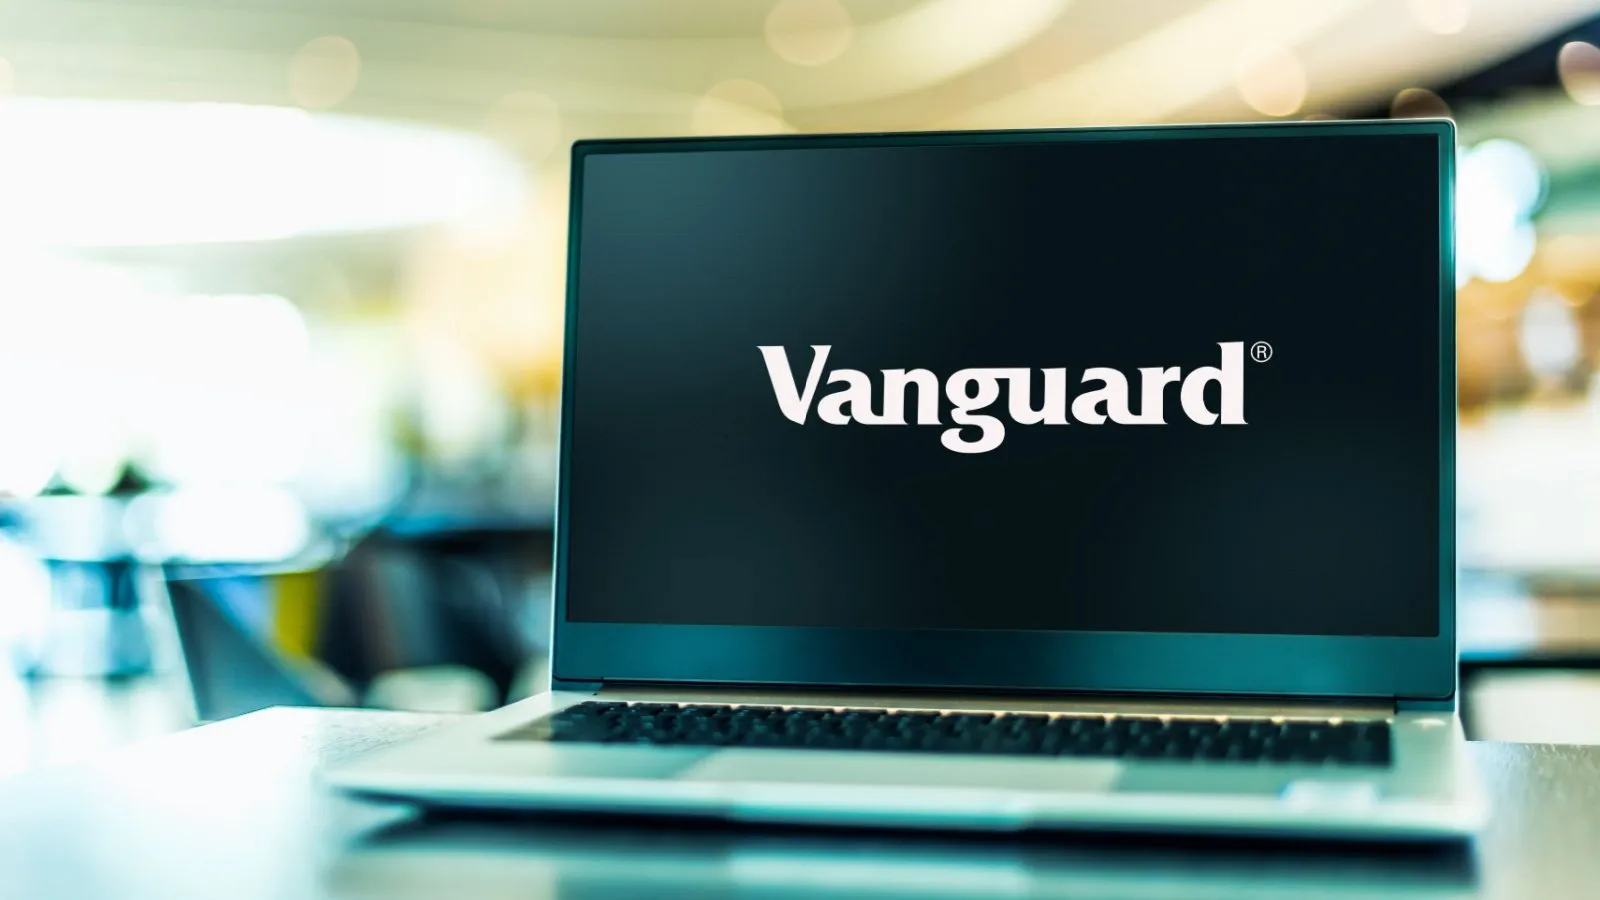 vanguard logo